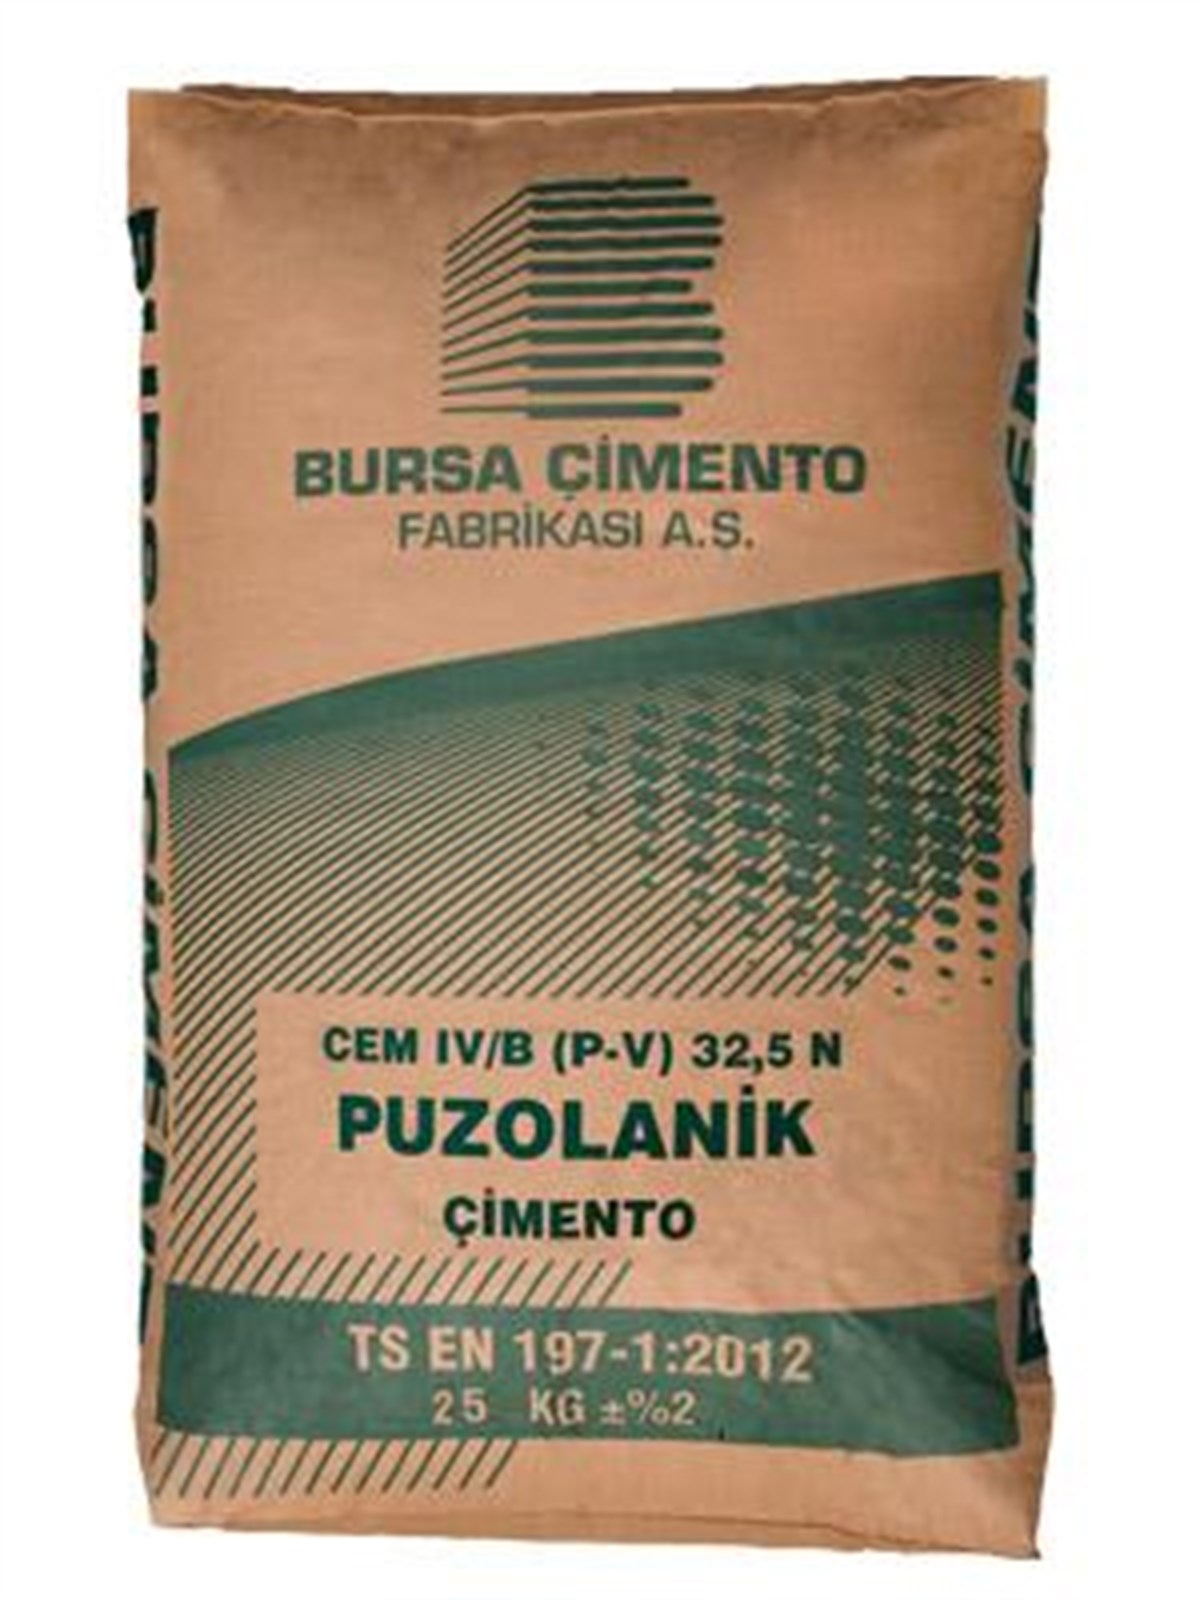 bursa-cimento-25kg-puzolanik-ed3511-1.jpg